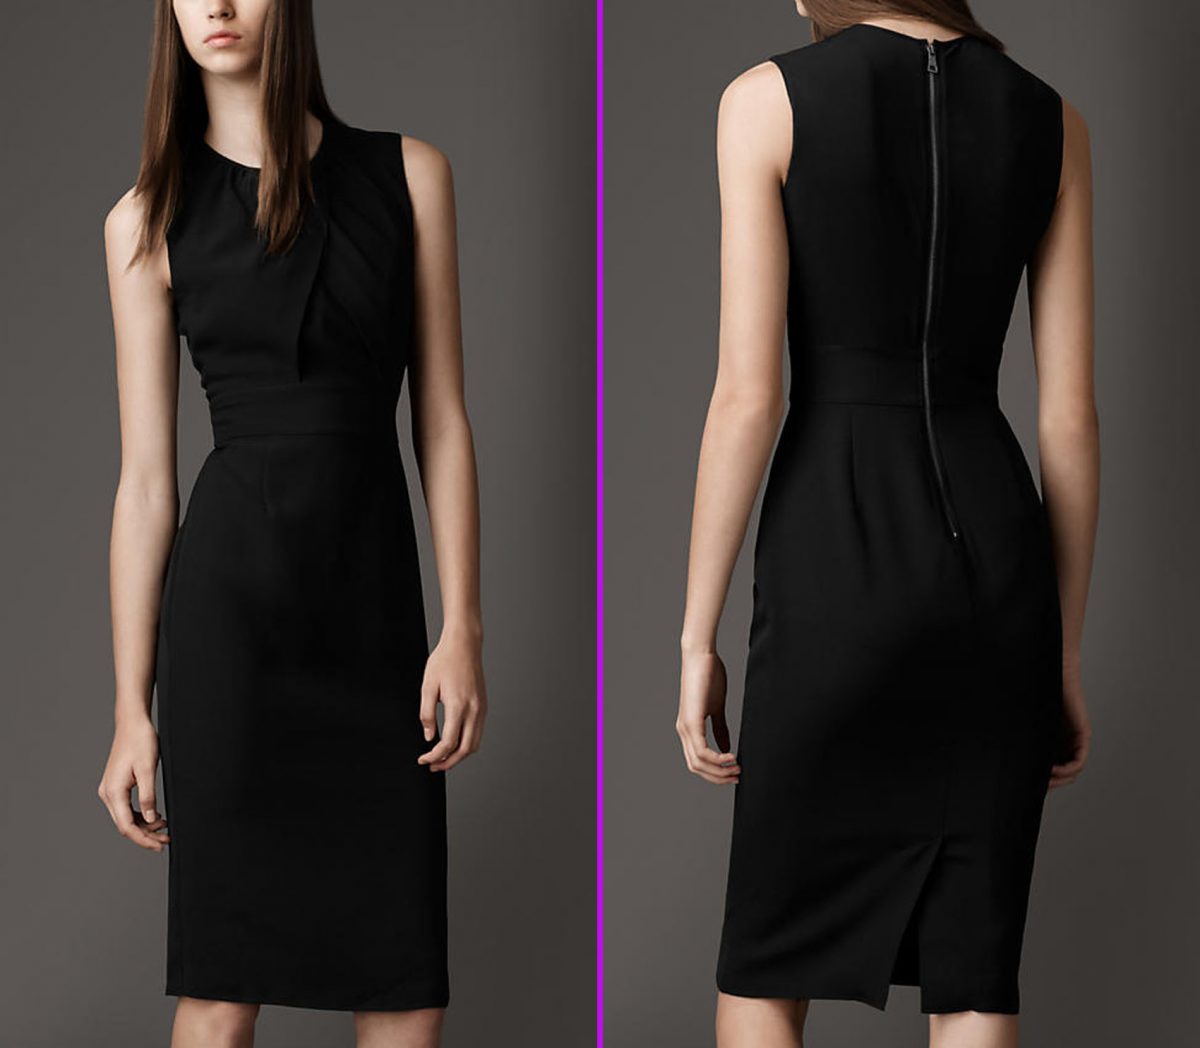 Black Dresses for Women: Styling on the Next Level – careyfashion.com